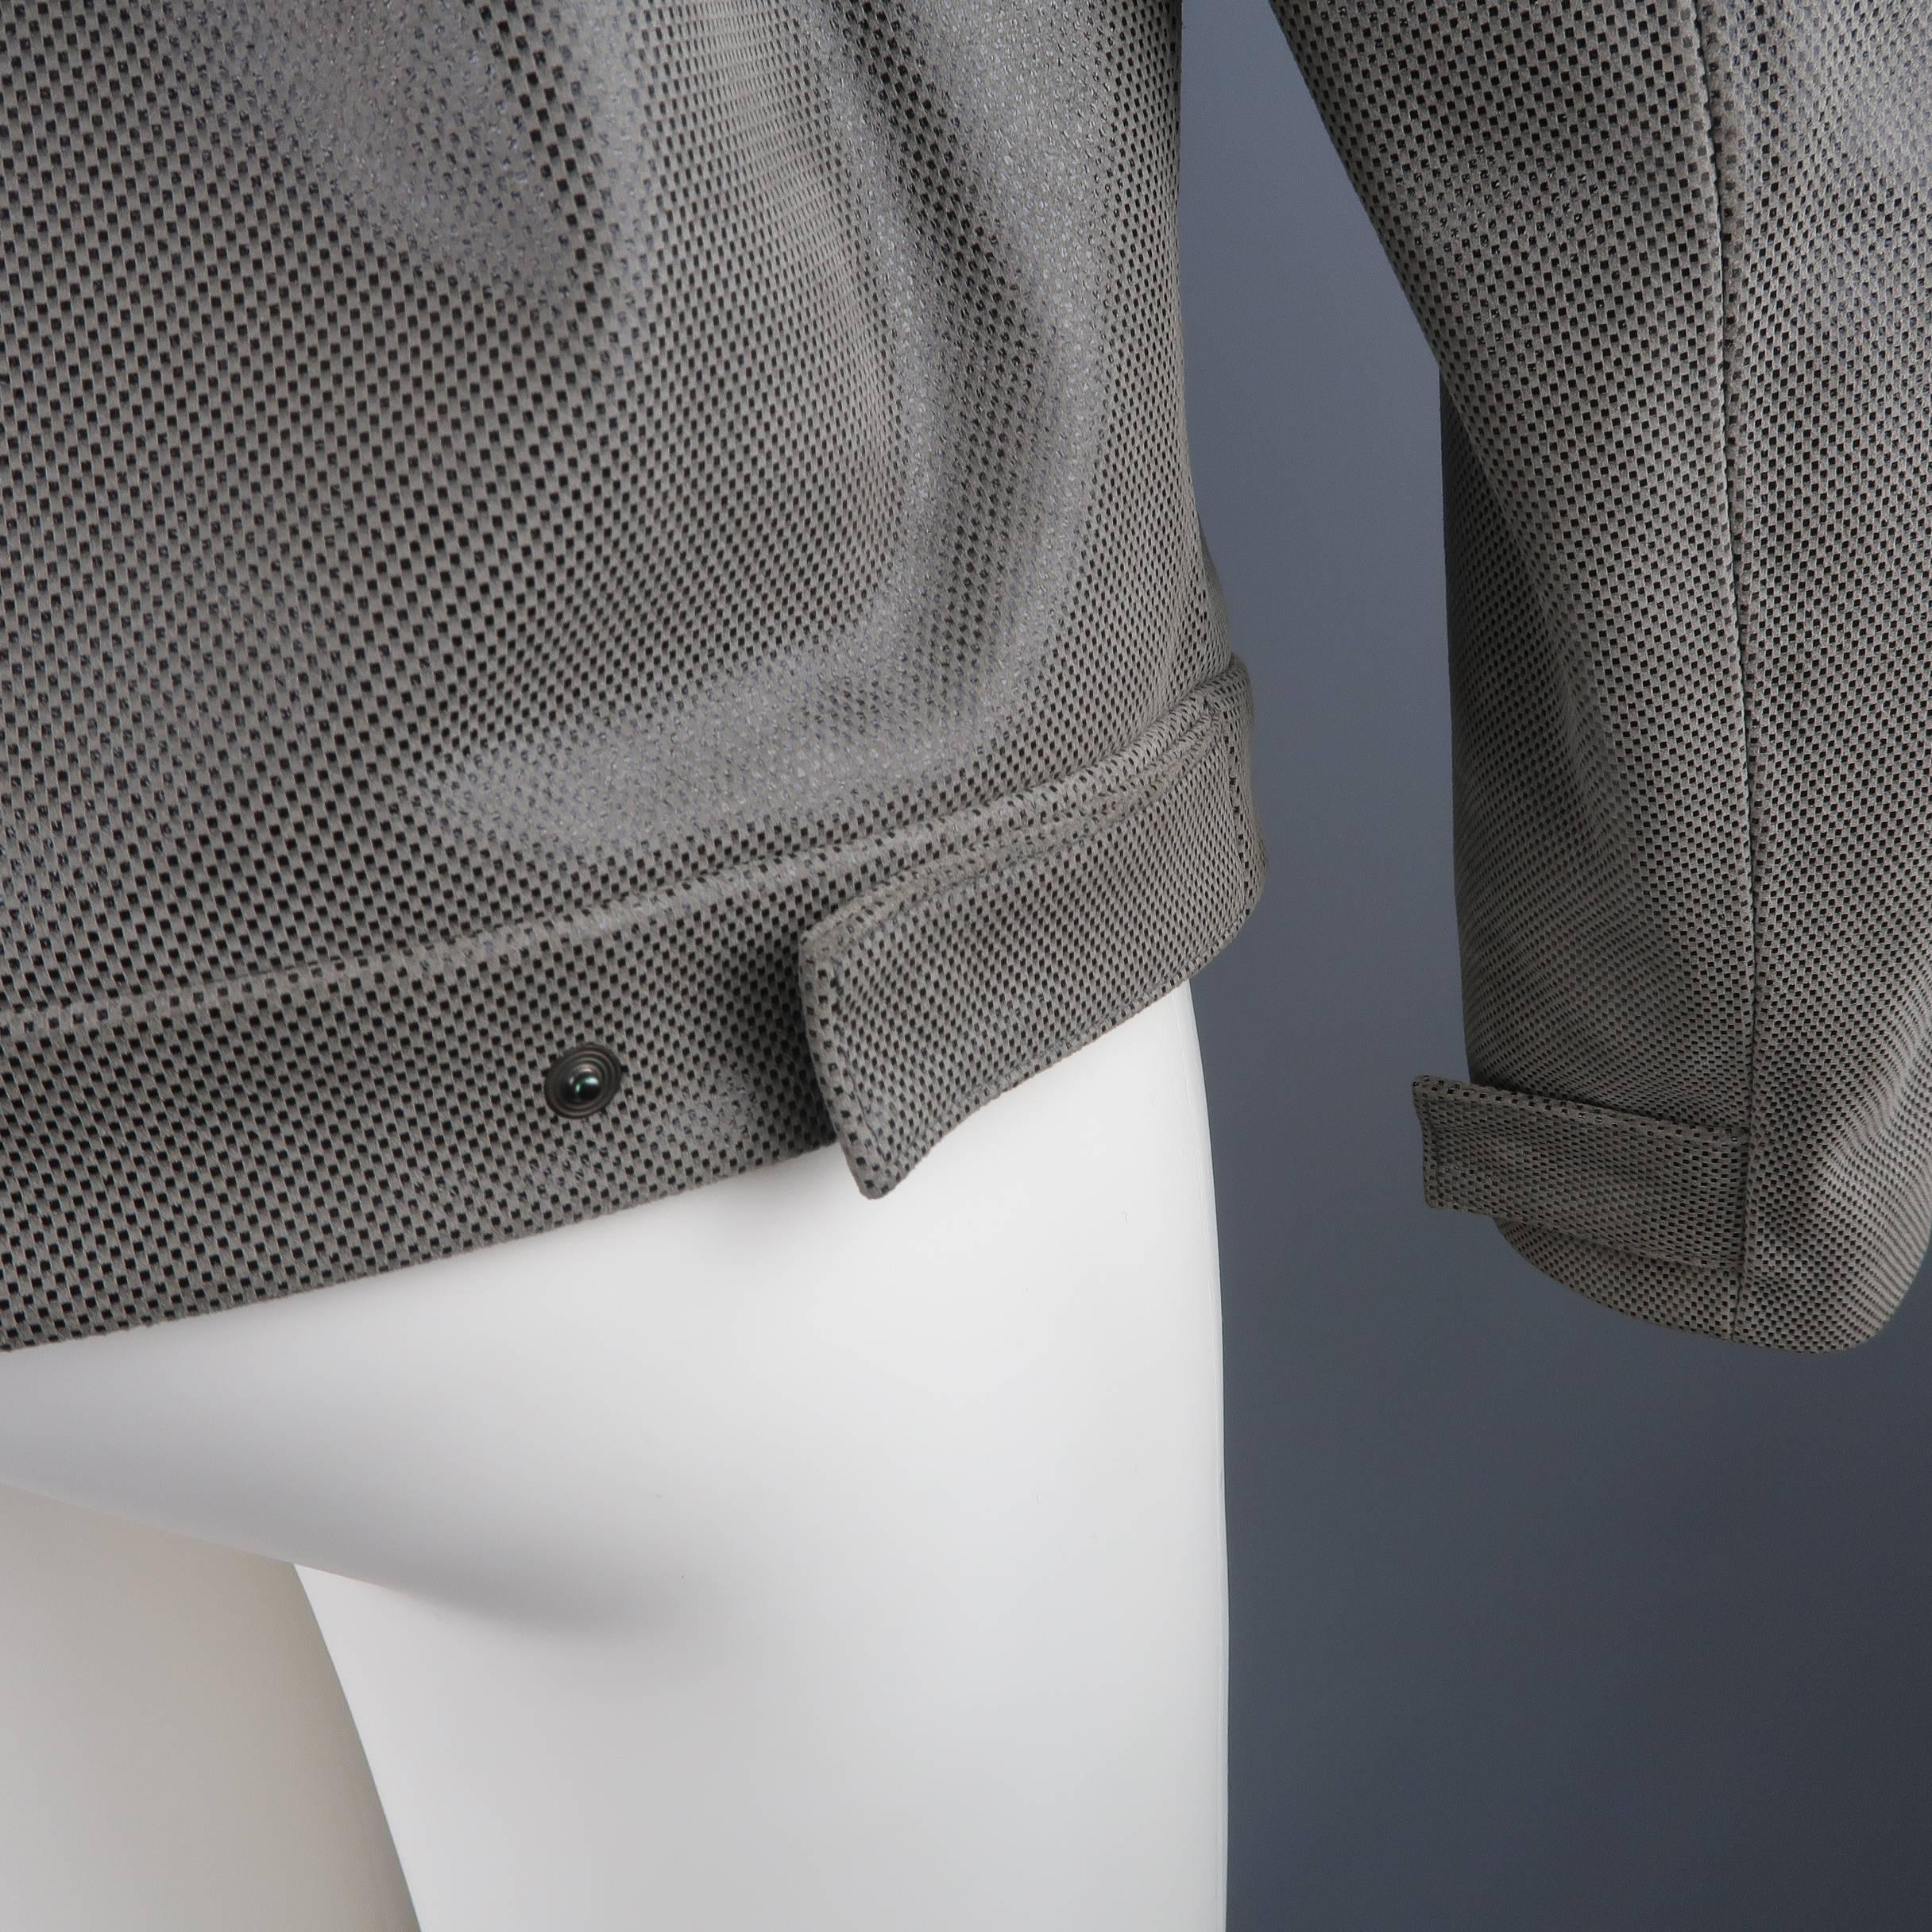 Men's Calvin Klein Collection Jacket Grey and Black Metallic Leather Jacket  